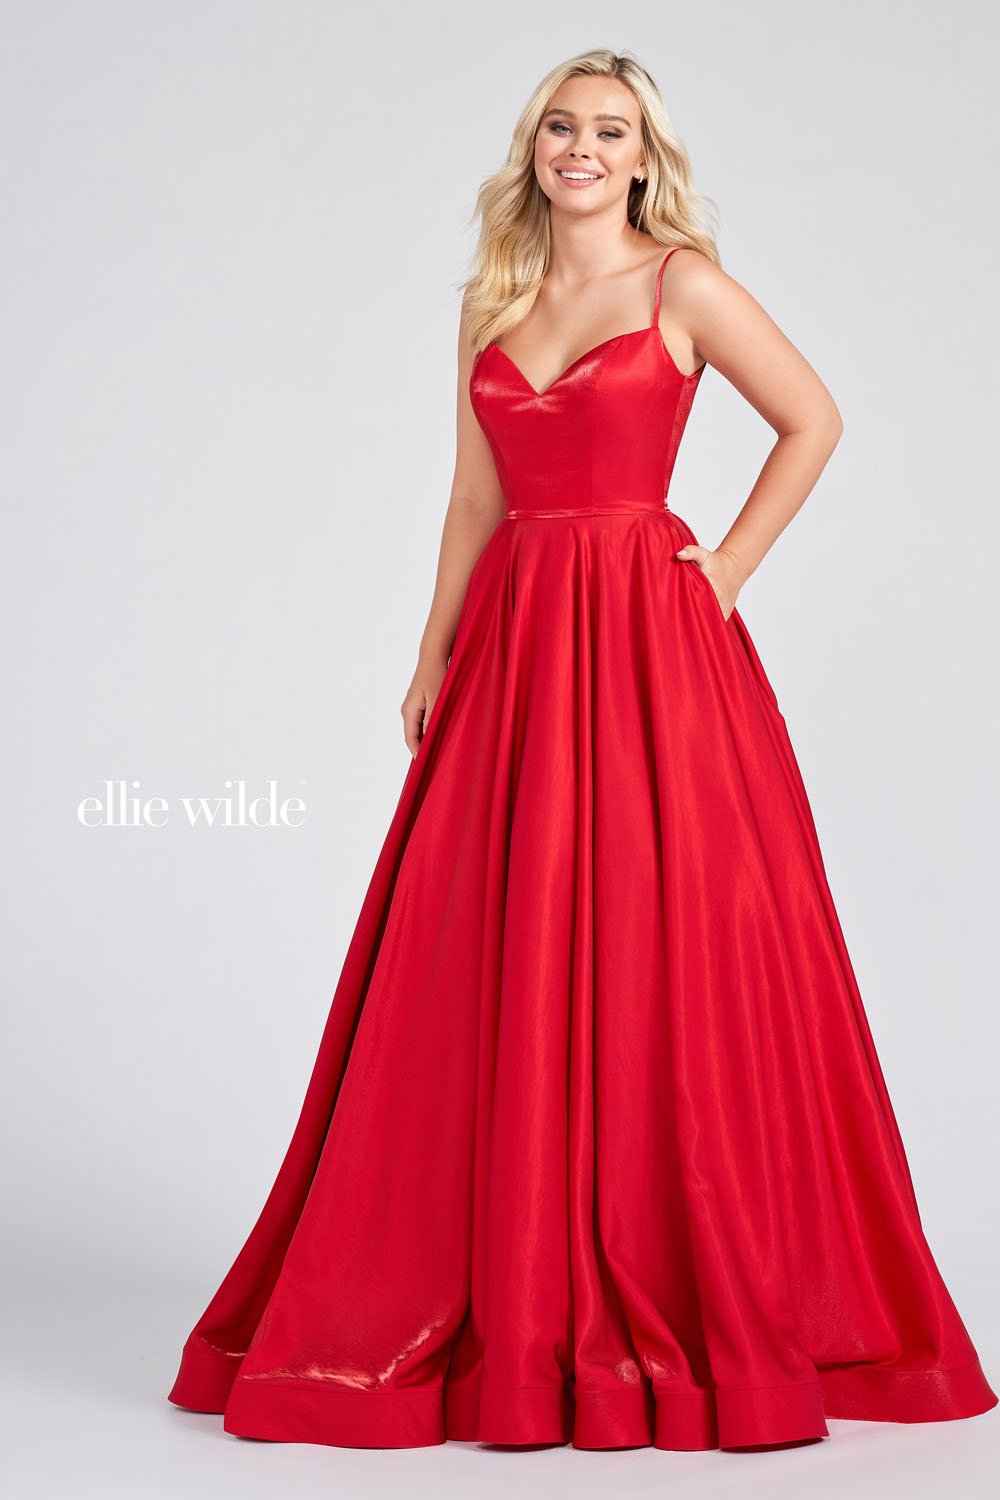 Ellie Wilde Red EW122046 Prom Dress Image.  Red formal dress.